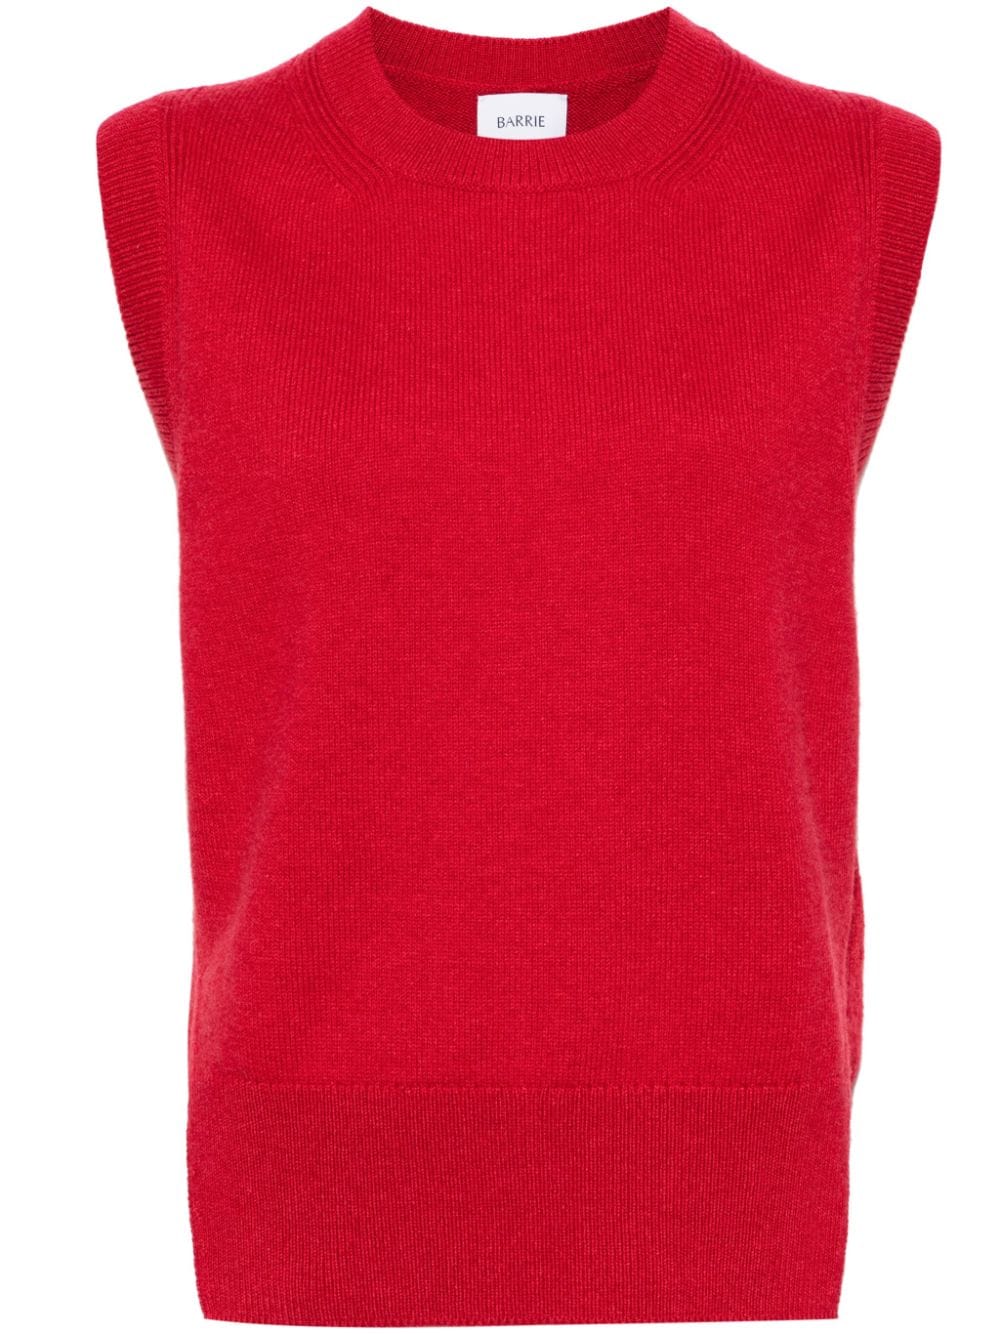 Iconic sleeveless cashmere top